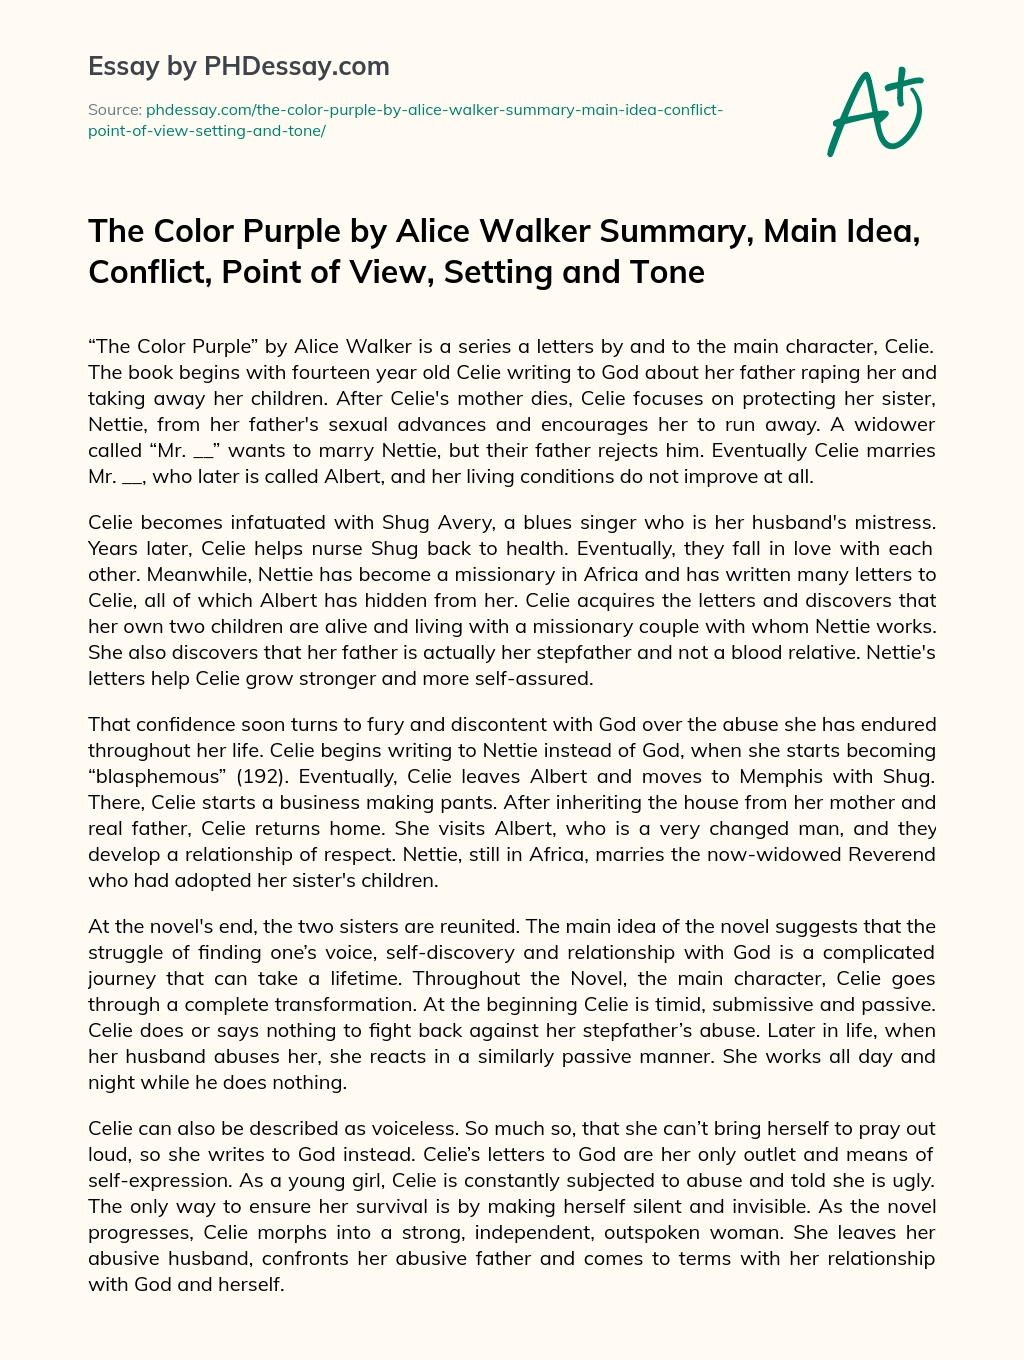 essay about the color purple